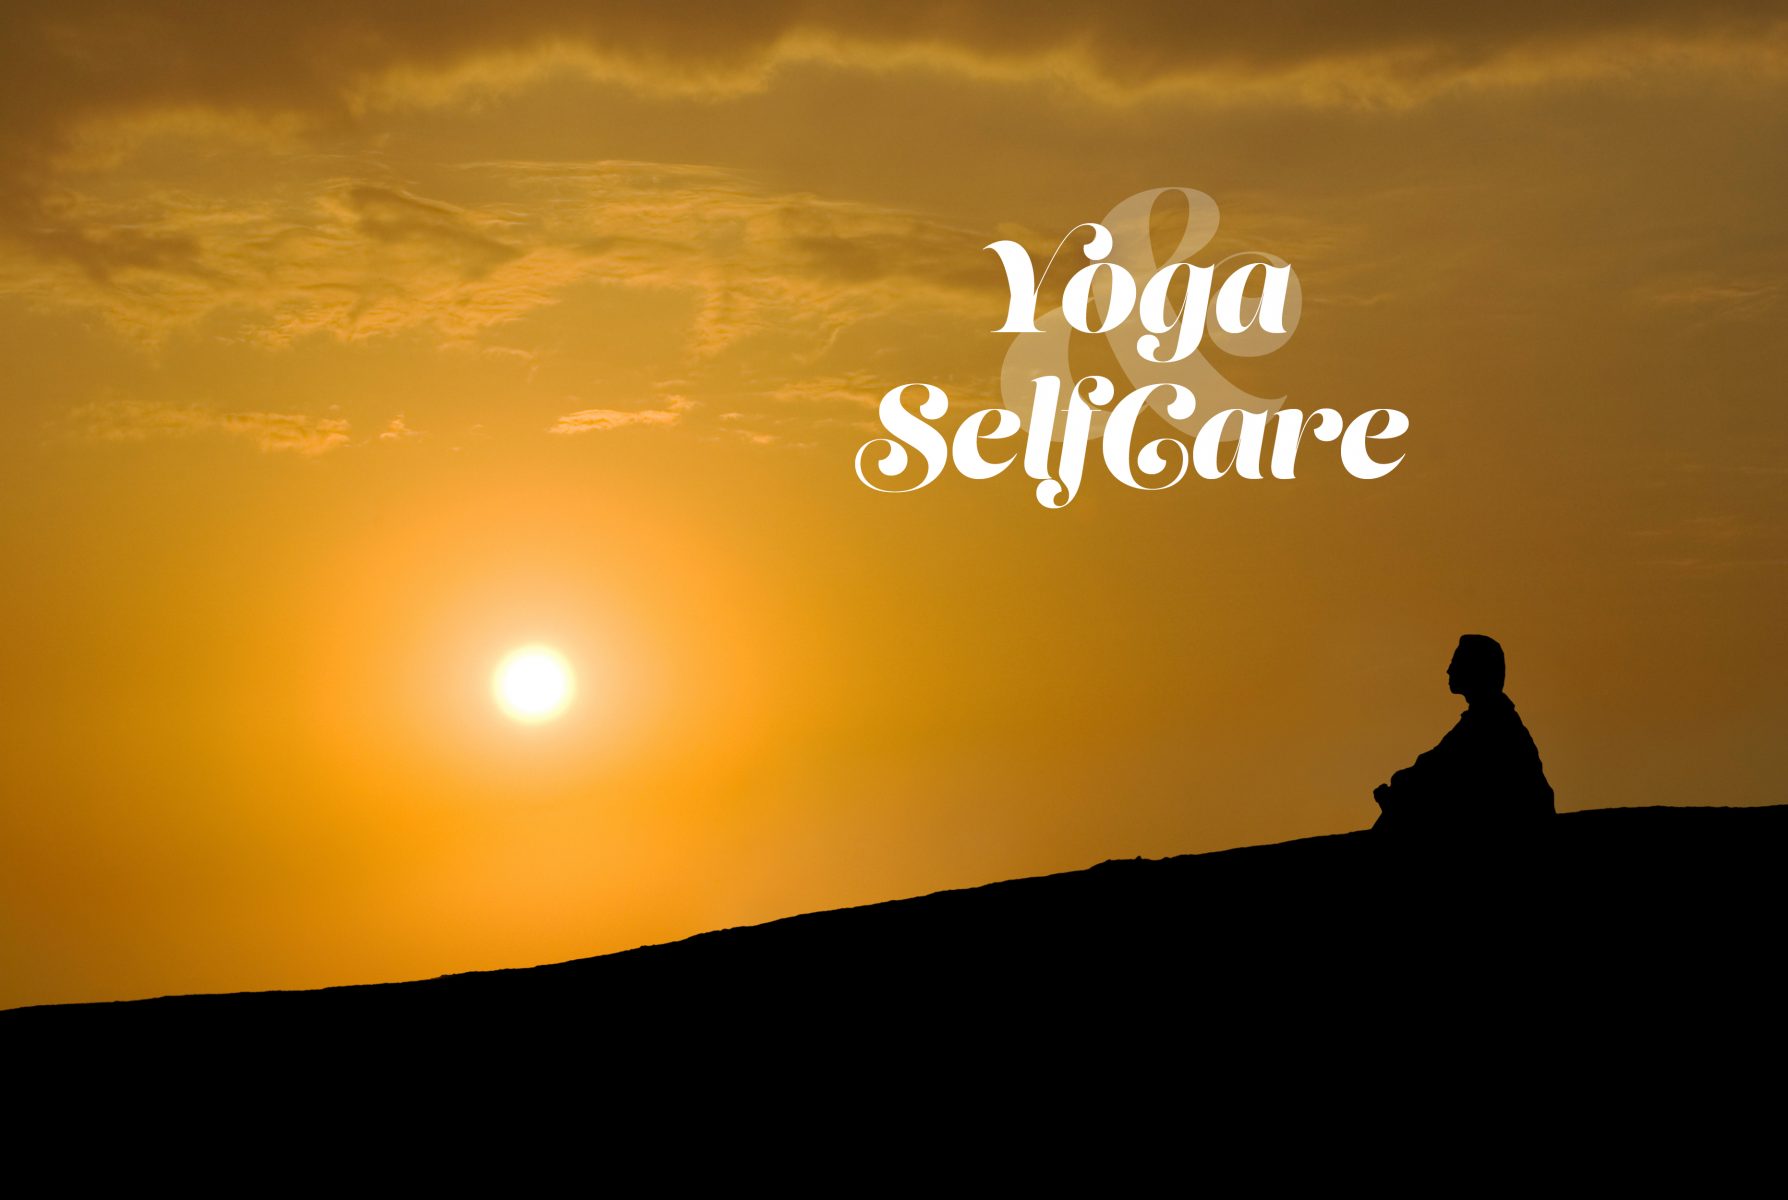 Yoga and Self Care Workshop